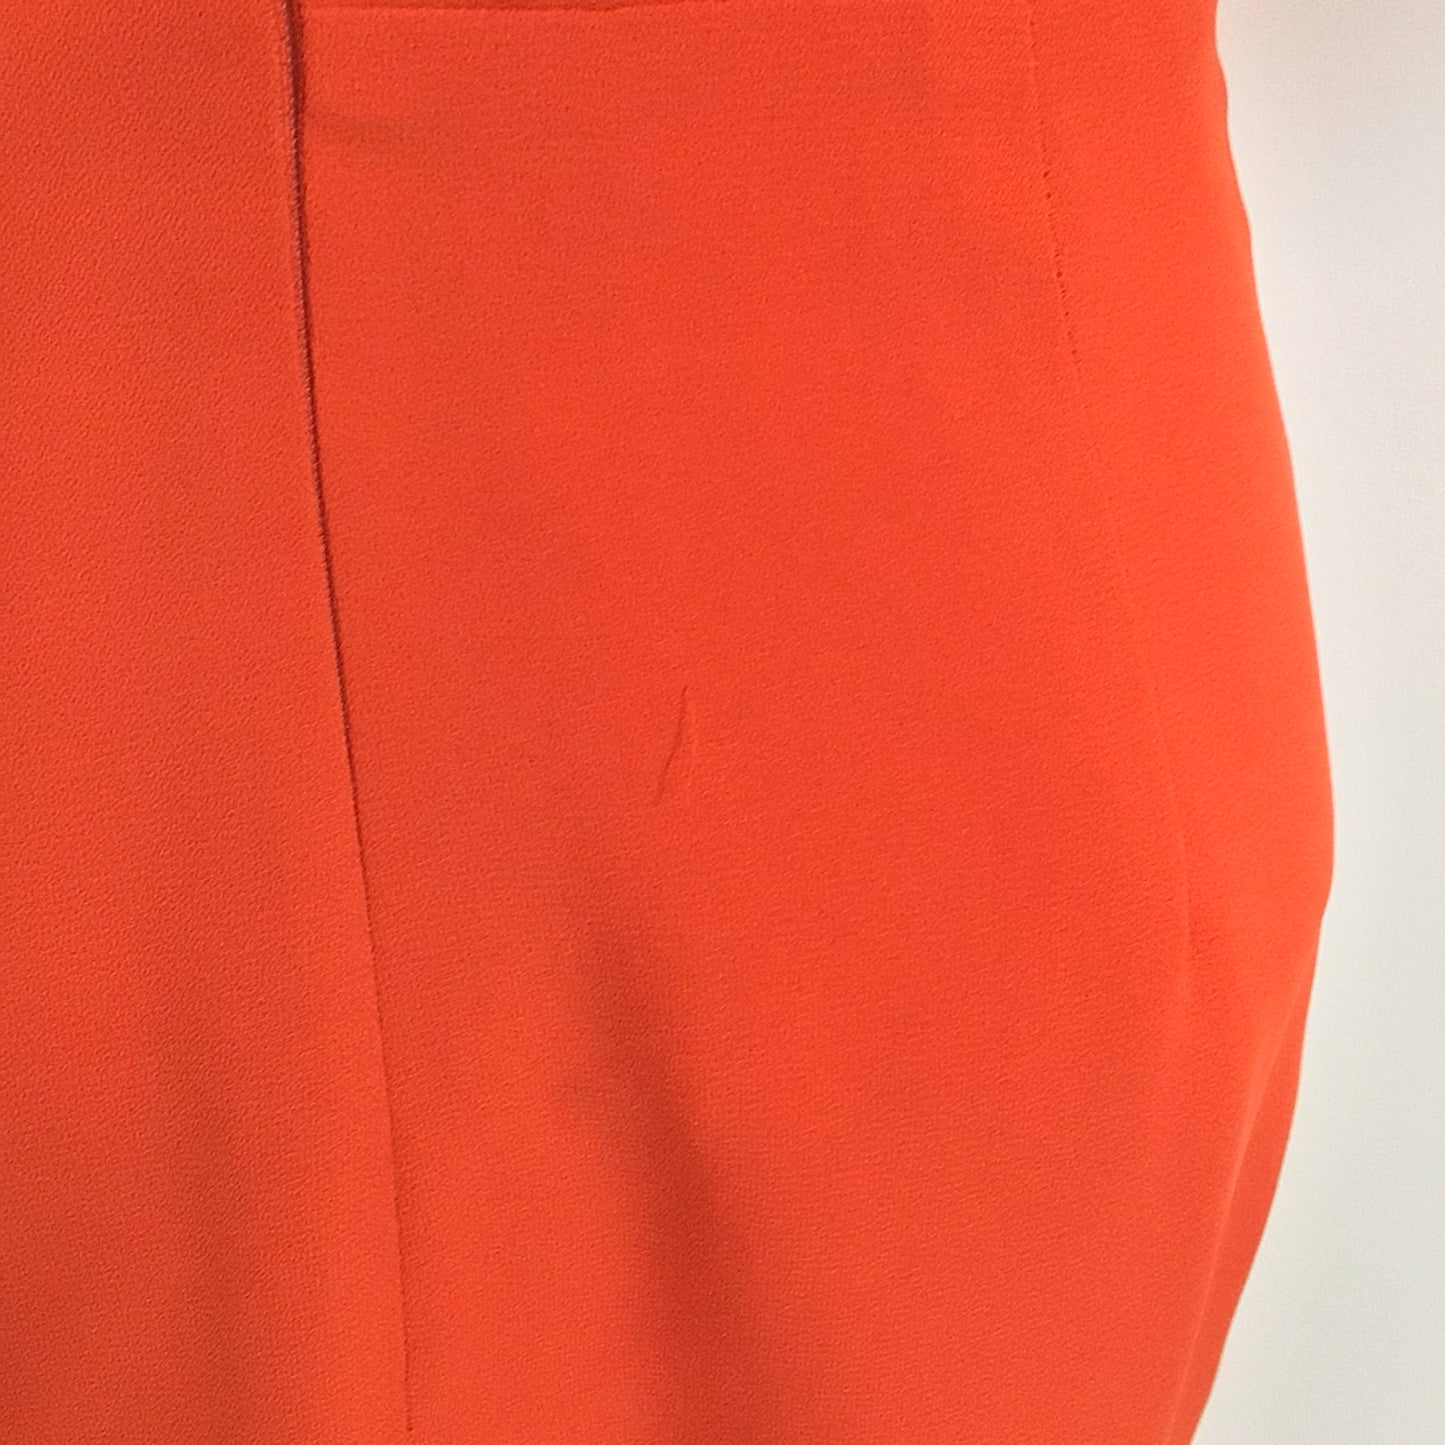 Reiss Orange Asymmetric Dress Size 8